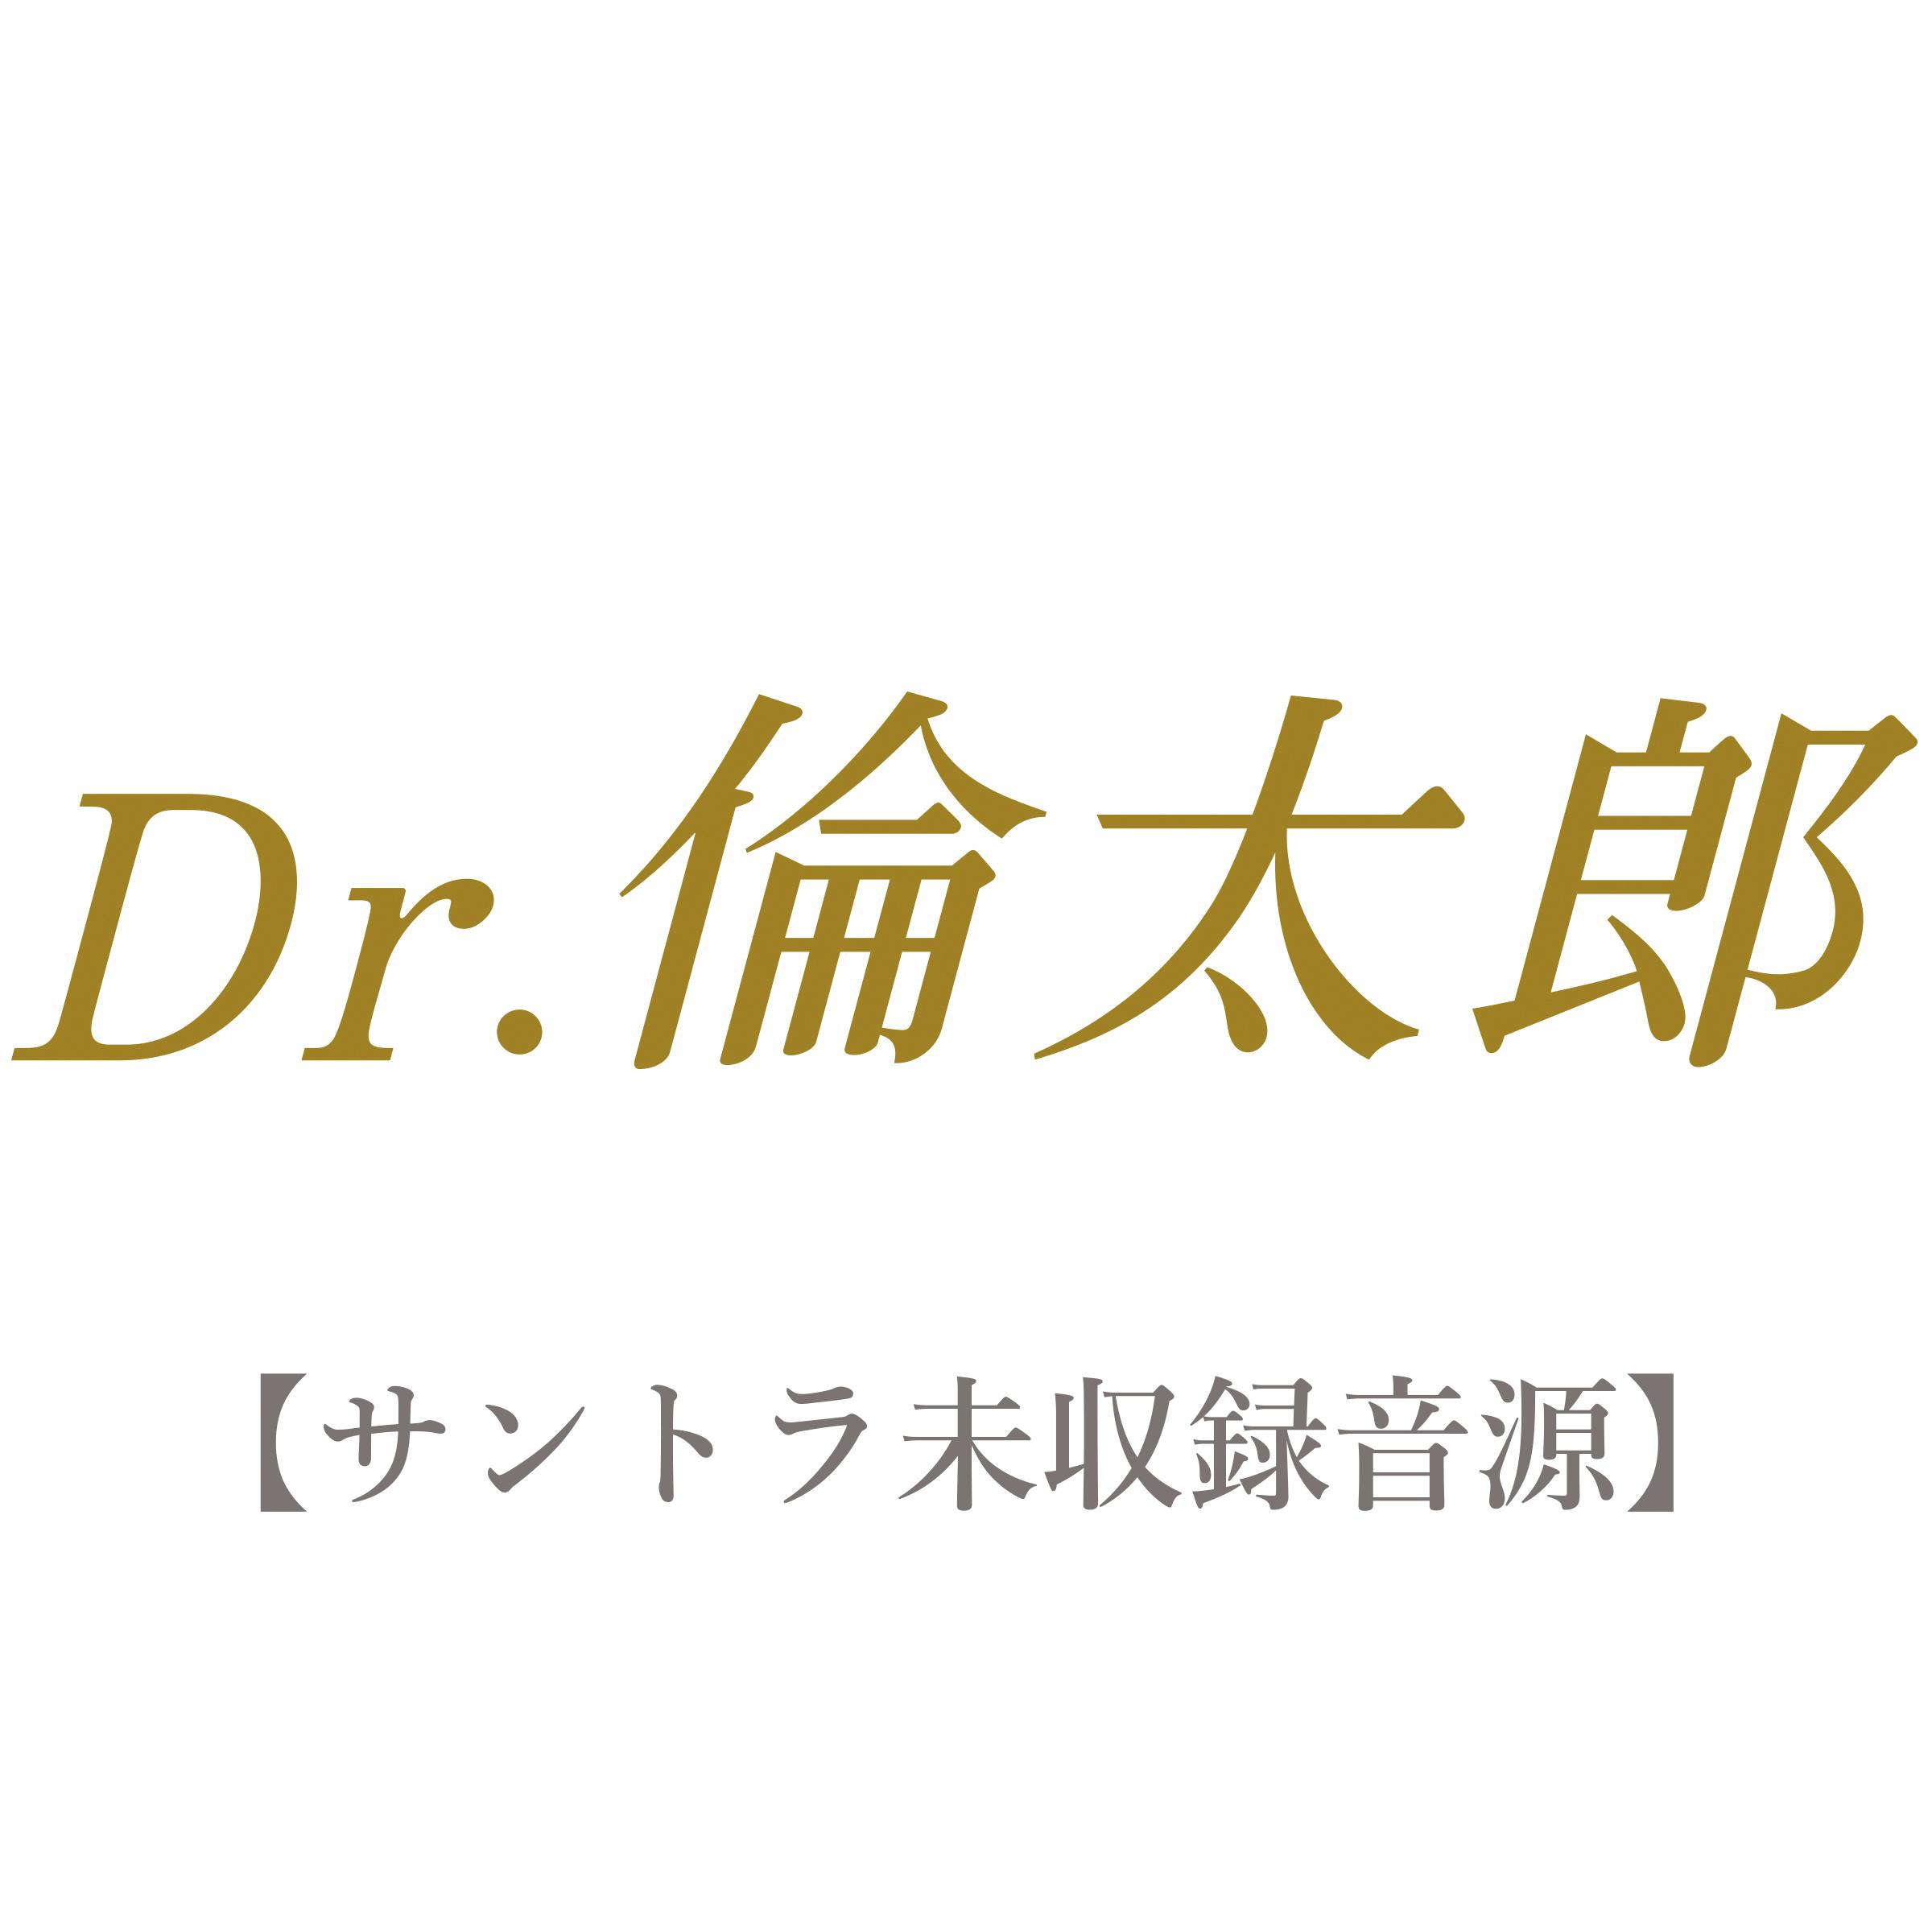 Dr.倫太郎 【サントラ未収録音源】专辑